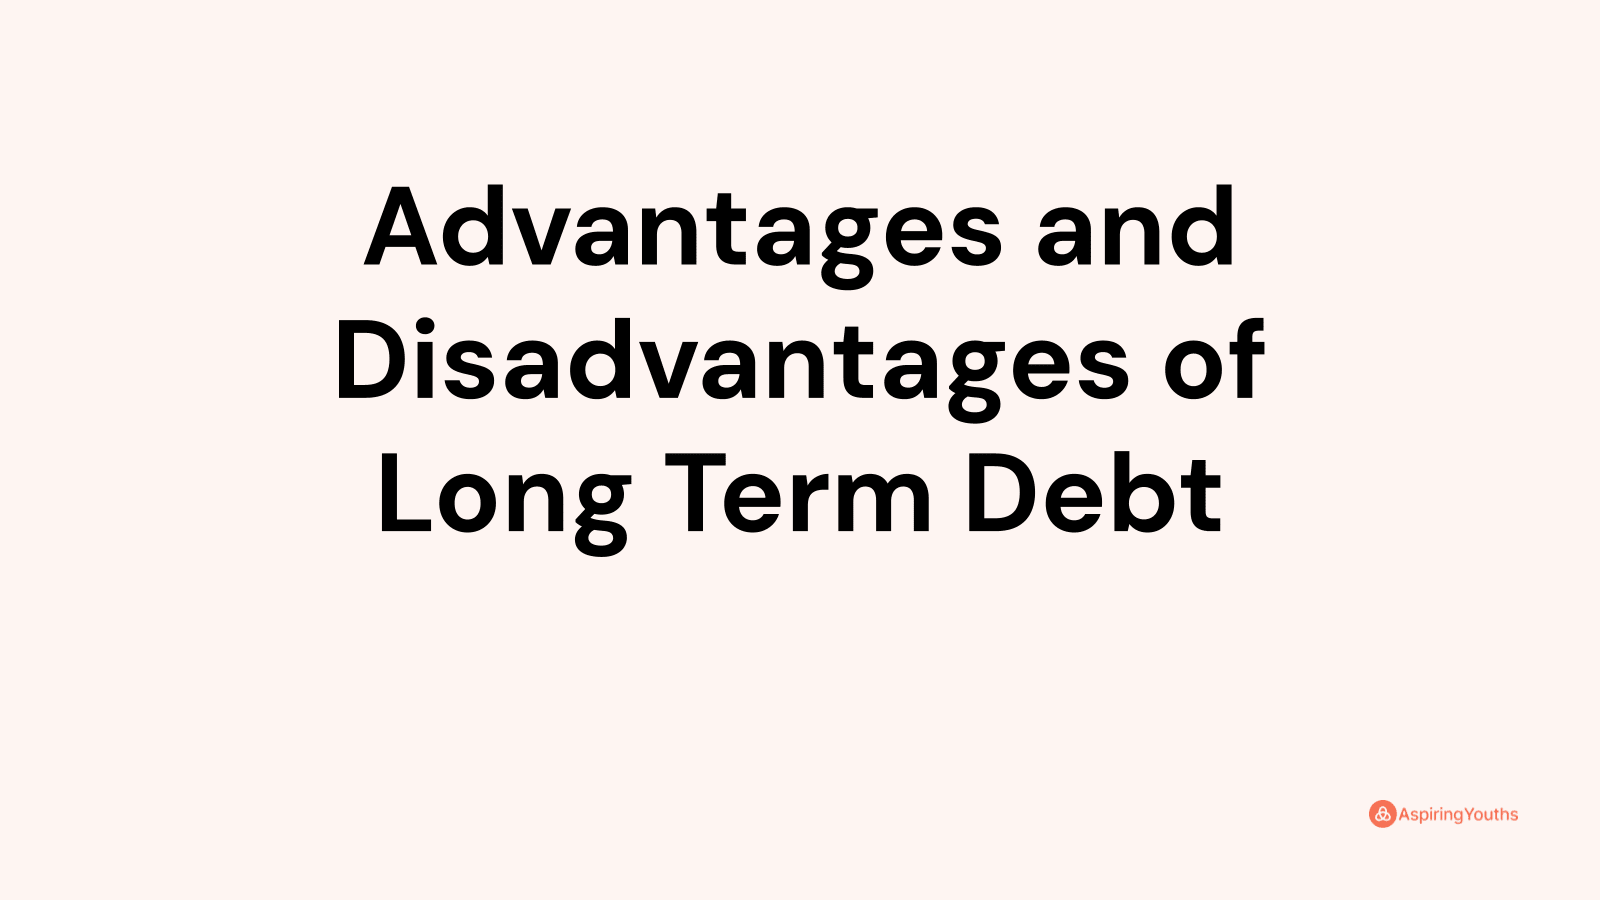 Advantages and disadvantages of Long Term Debt